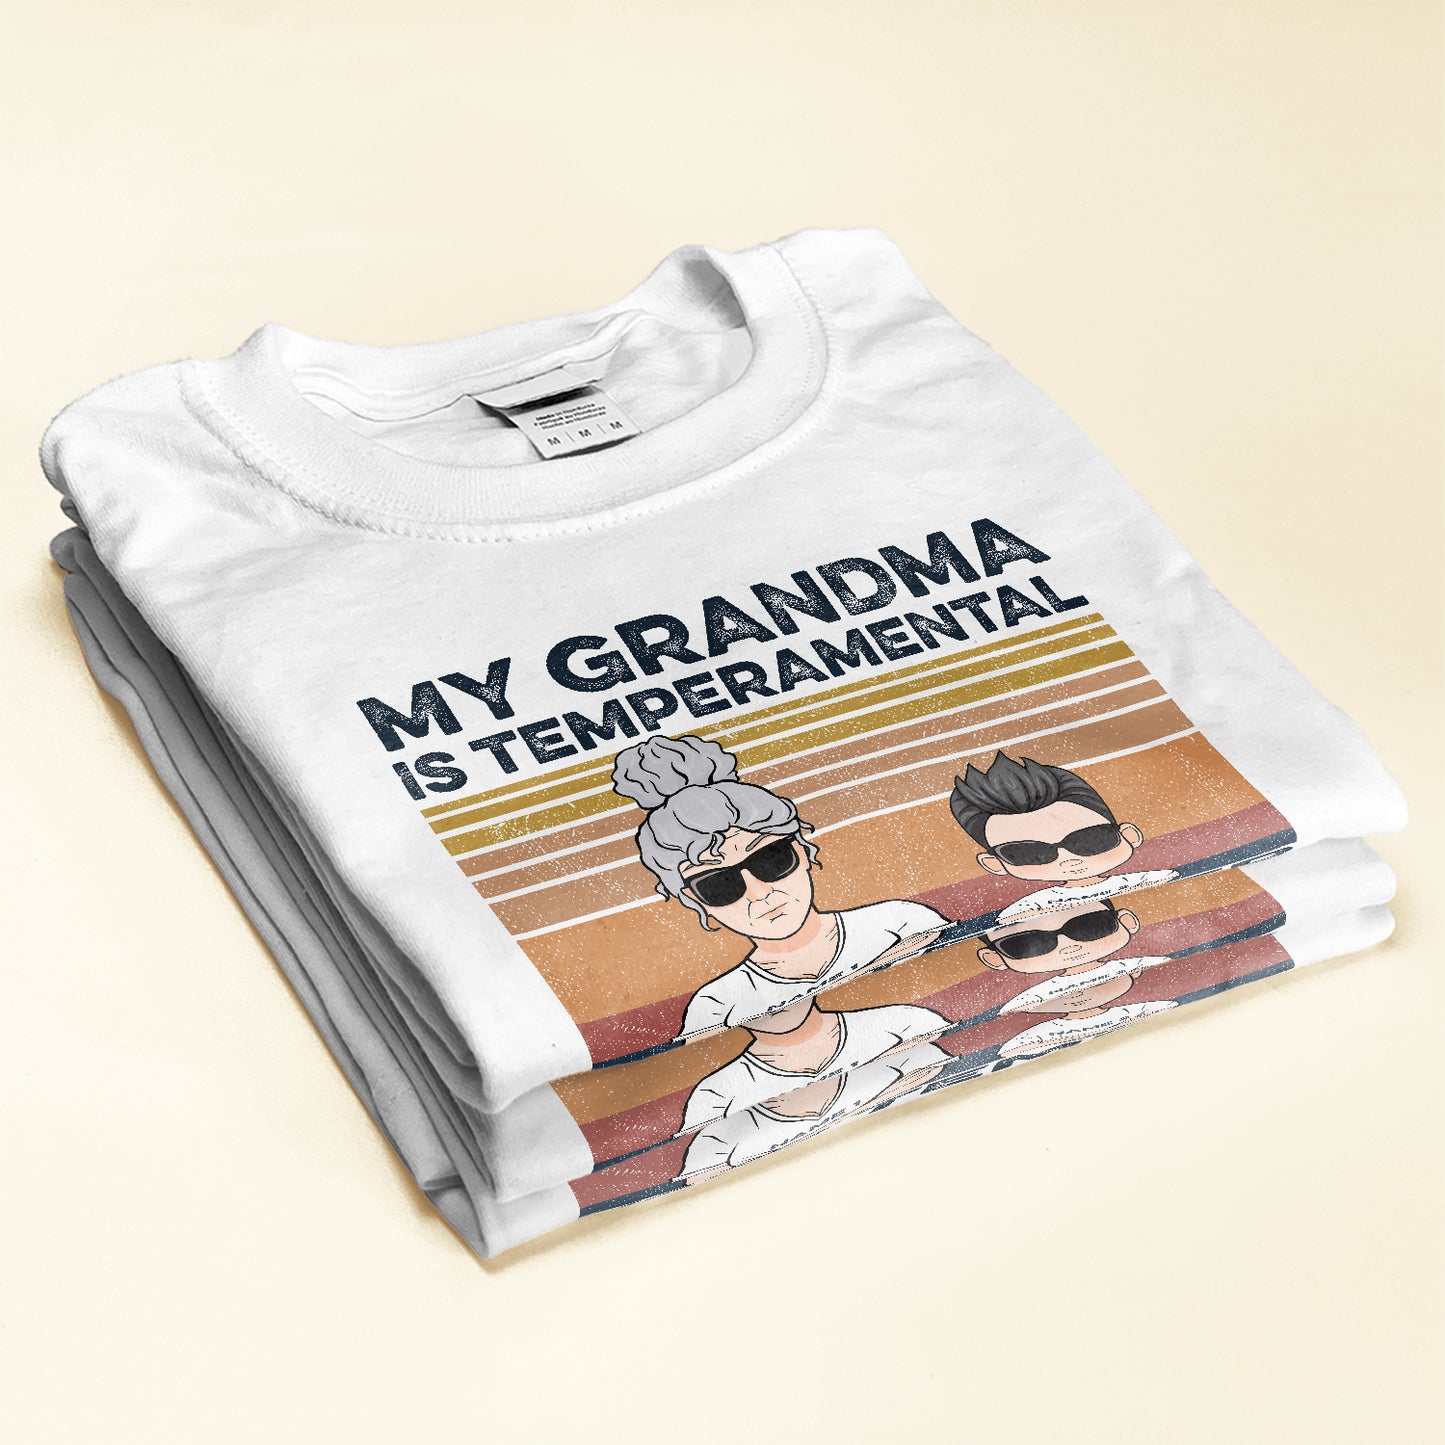 My Grandma Is Temperamental - Personalized Shirts - Gifts For Grandmas